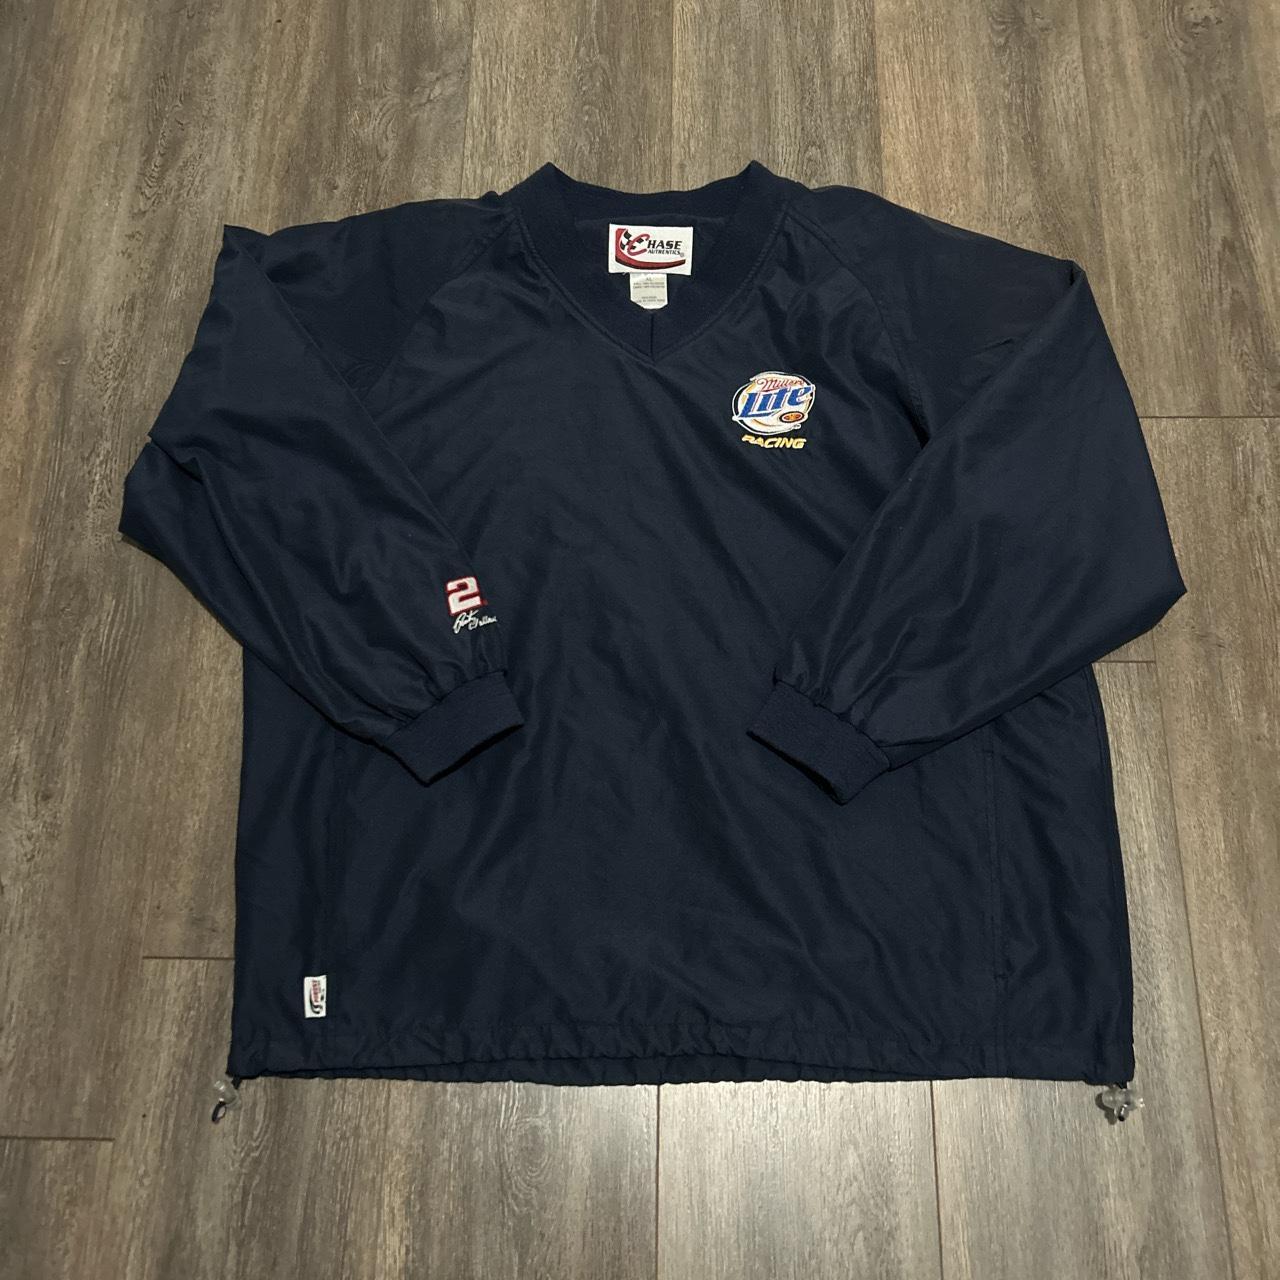 Chase Authentics Men's Navy Sweatshirt